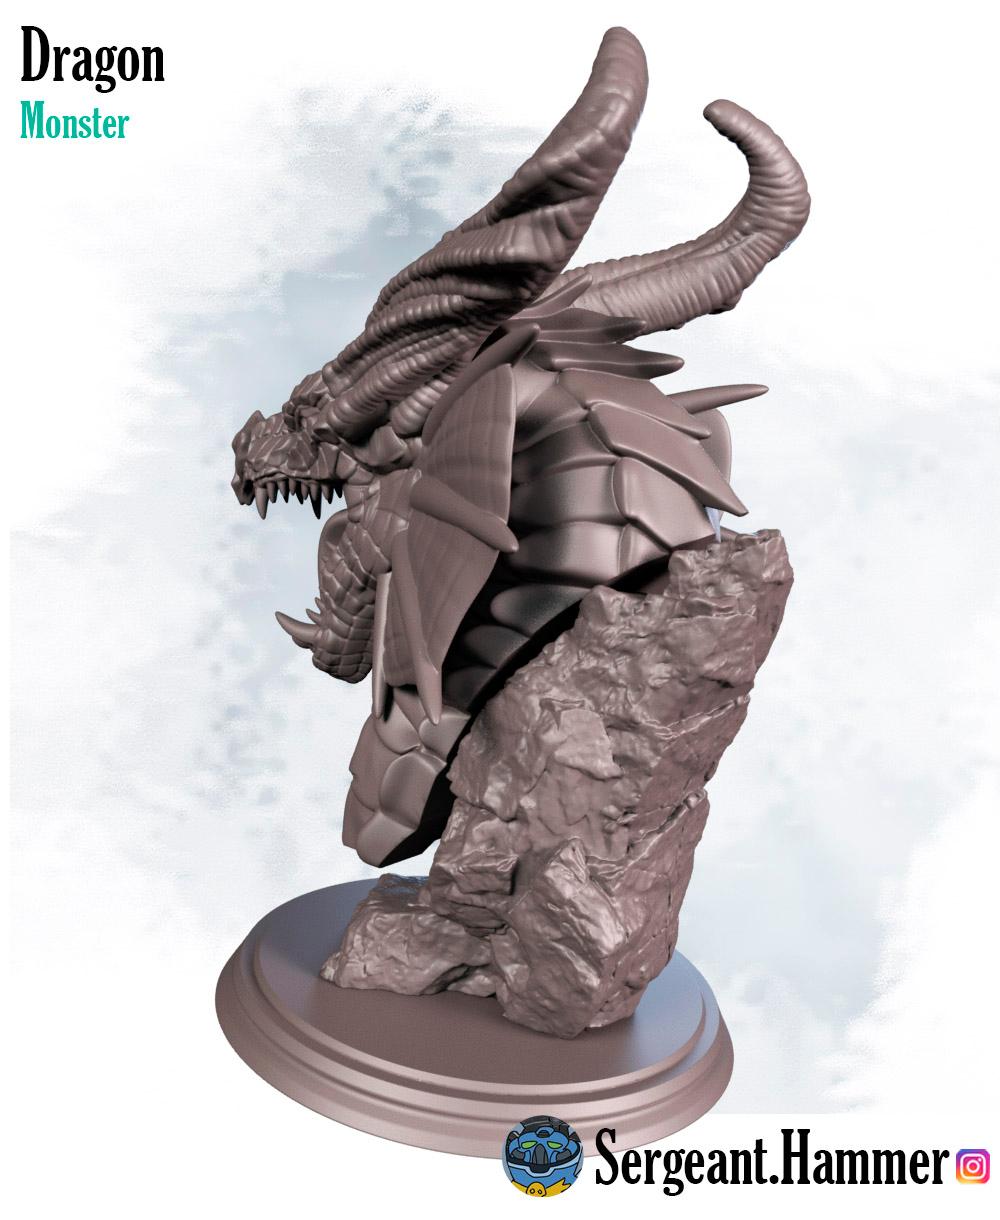 Dragon Bust 3d model